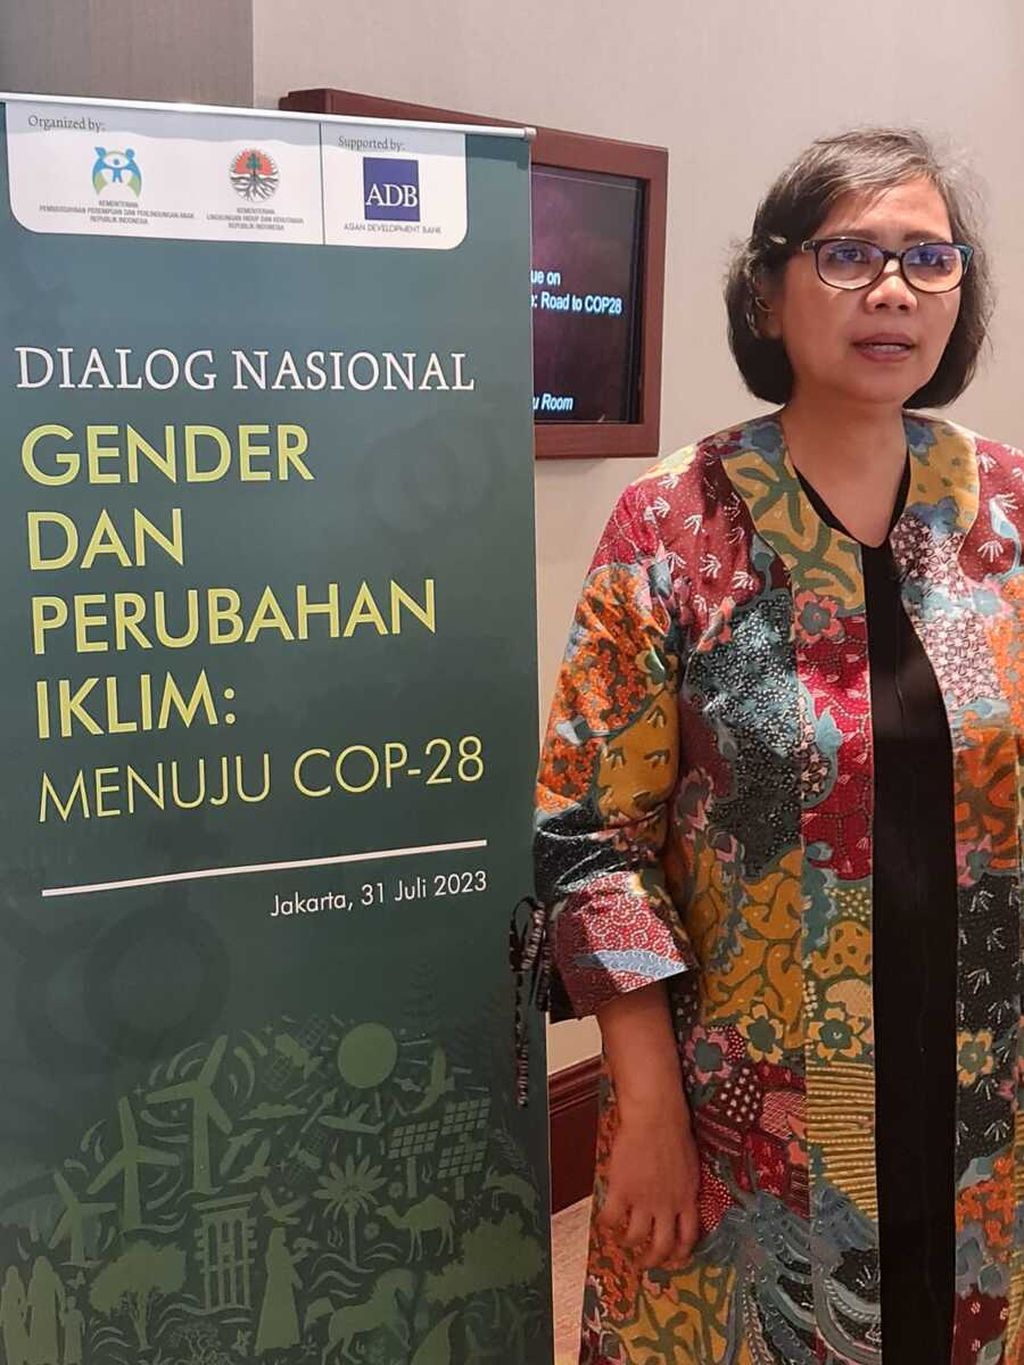 Deputi bidang Kesetaraan Gender Kementerian Pemberdayaan Perempuan dan Perlindungan Anak Lenny N Rosalin memberikan keterangan di sela-sela “Dialog Nasional tentang Gender dan Perubahan Iklim” di Jakarta, Senin (31/7/2023).